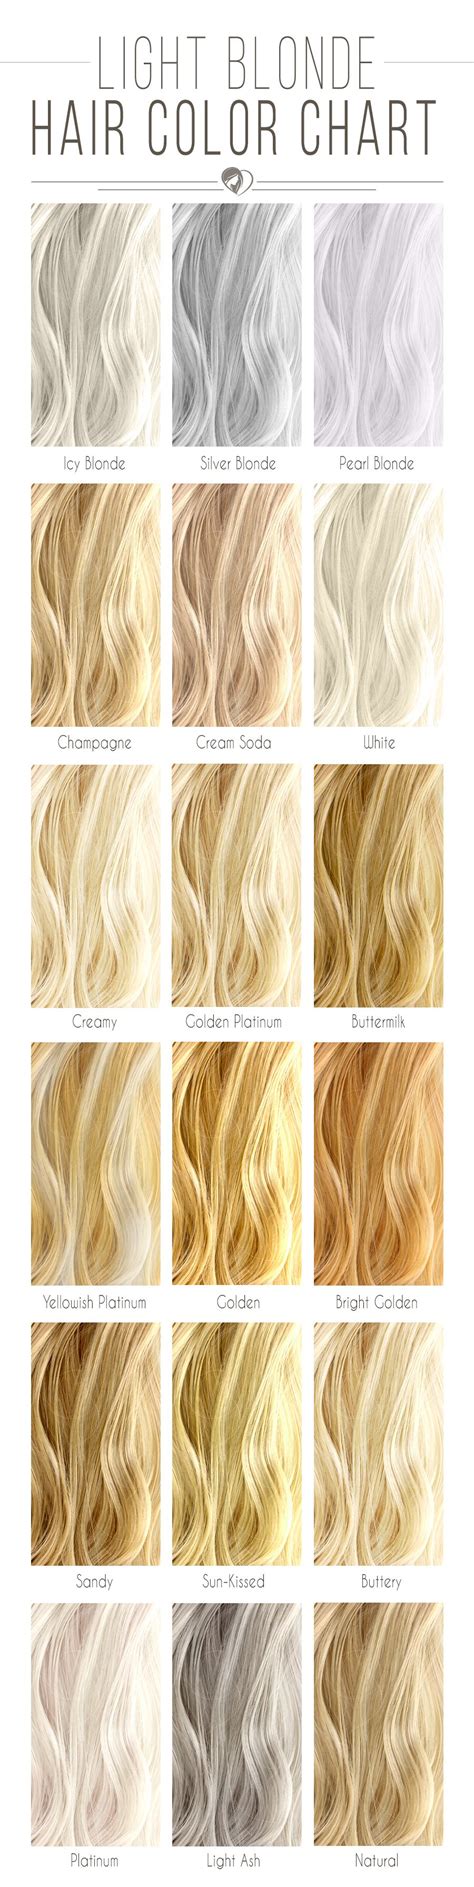 Hair Color 2017 Trendy Hair Color New Hair Colors White Hair Colors Light Hair Colors Hair